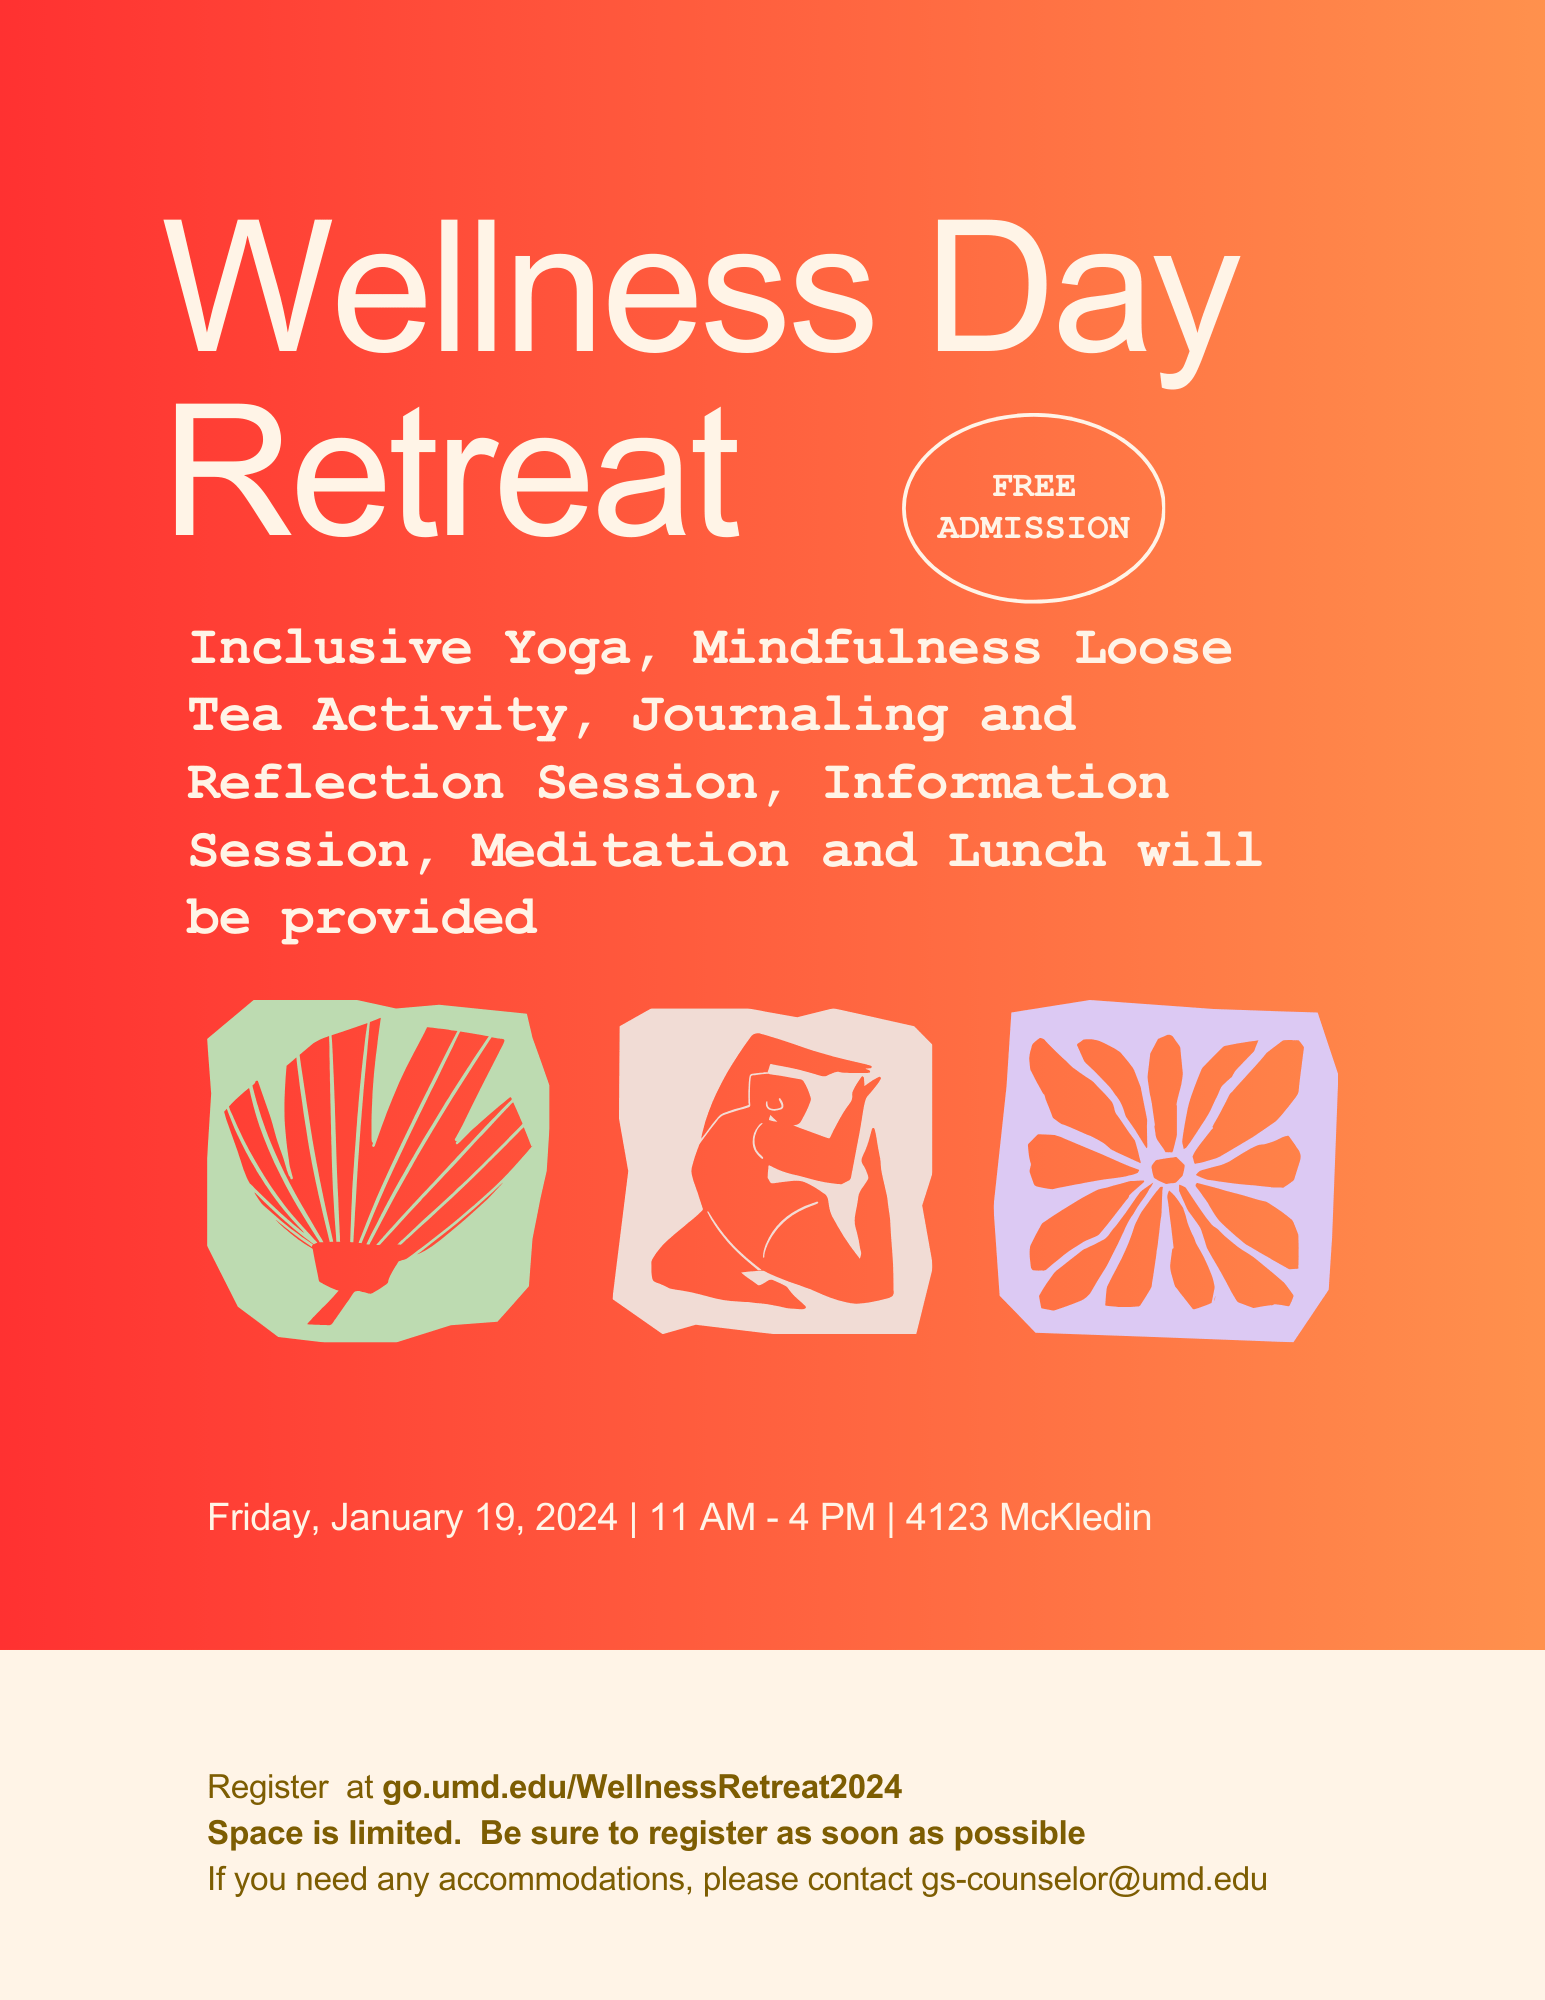 Wellness Day Retreat flyer